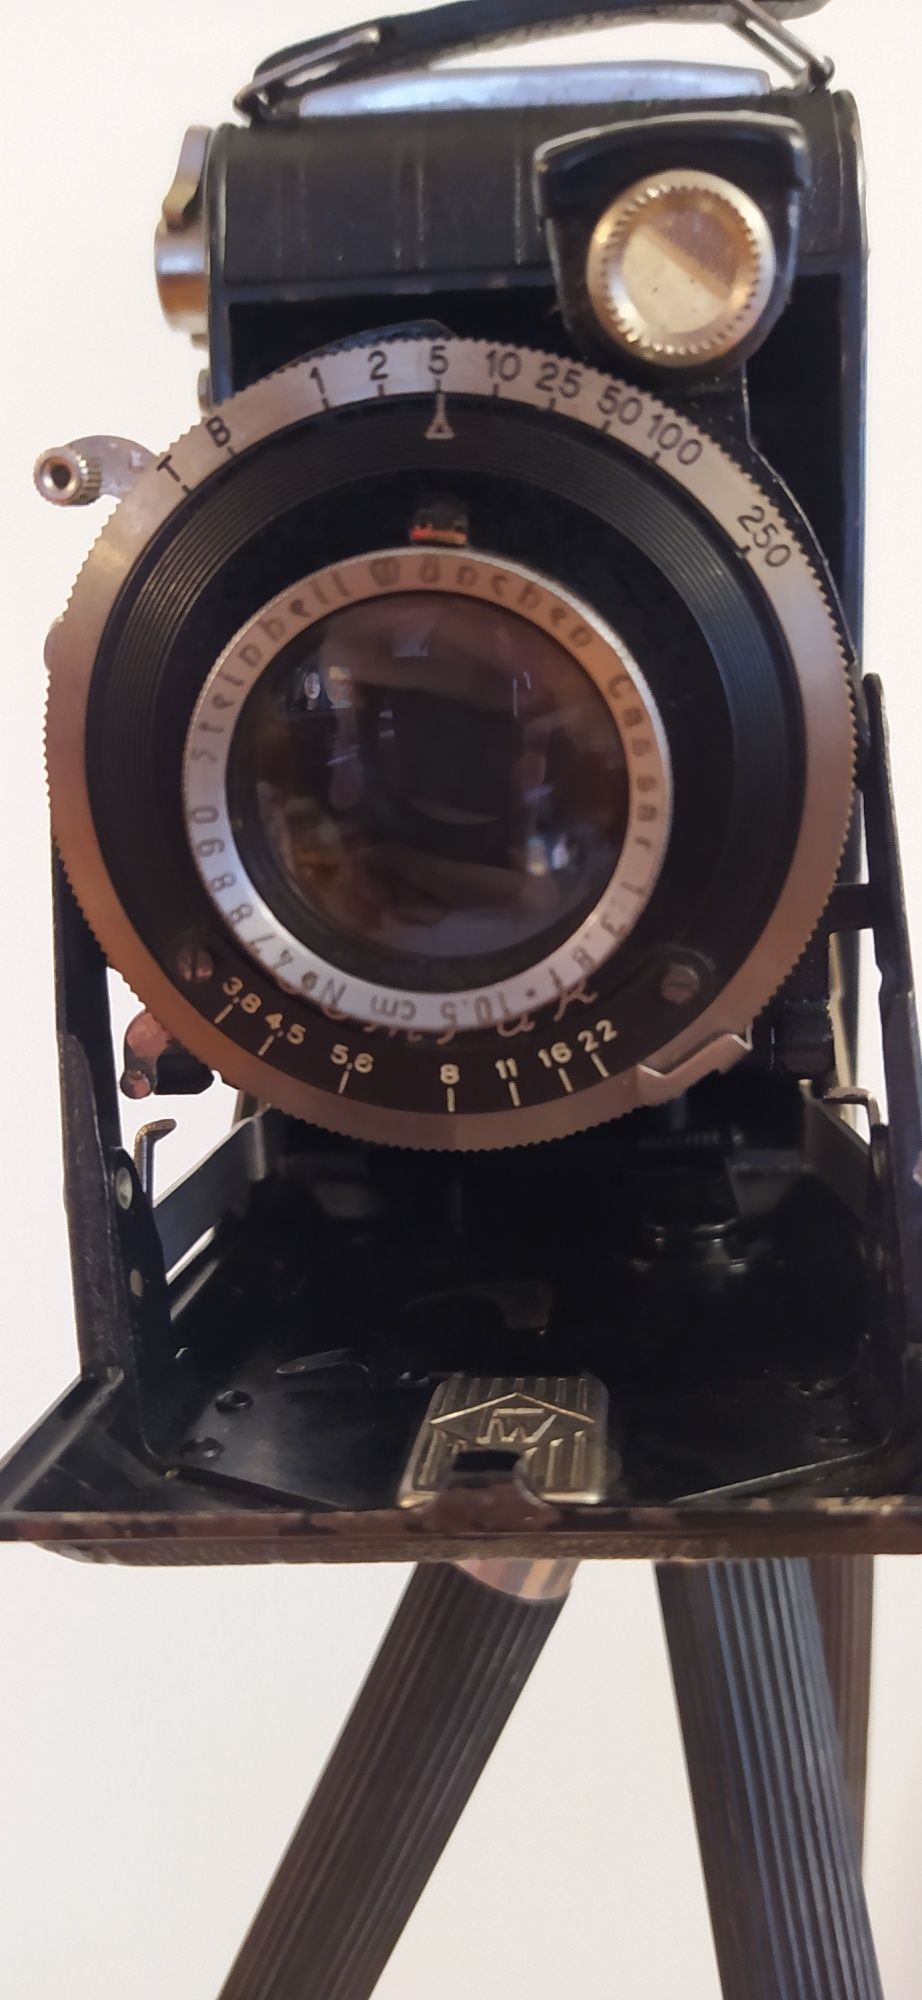 Aparat antyczny Kodak